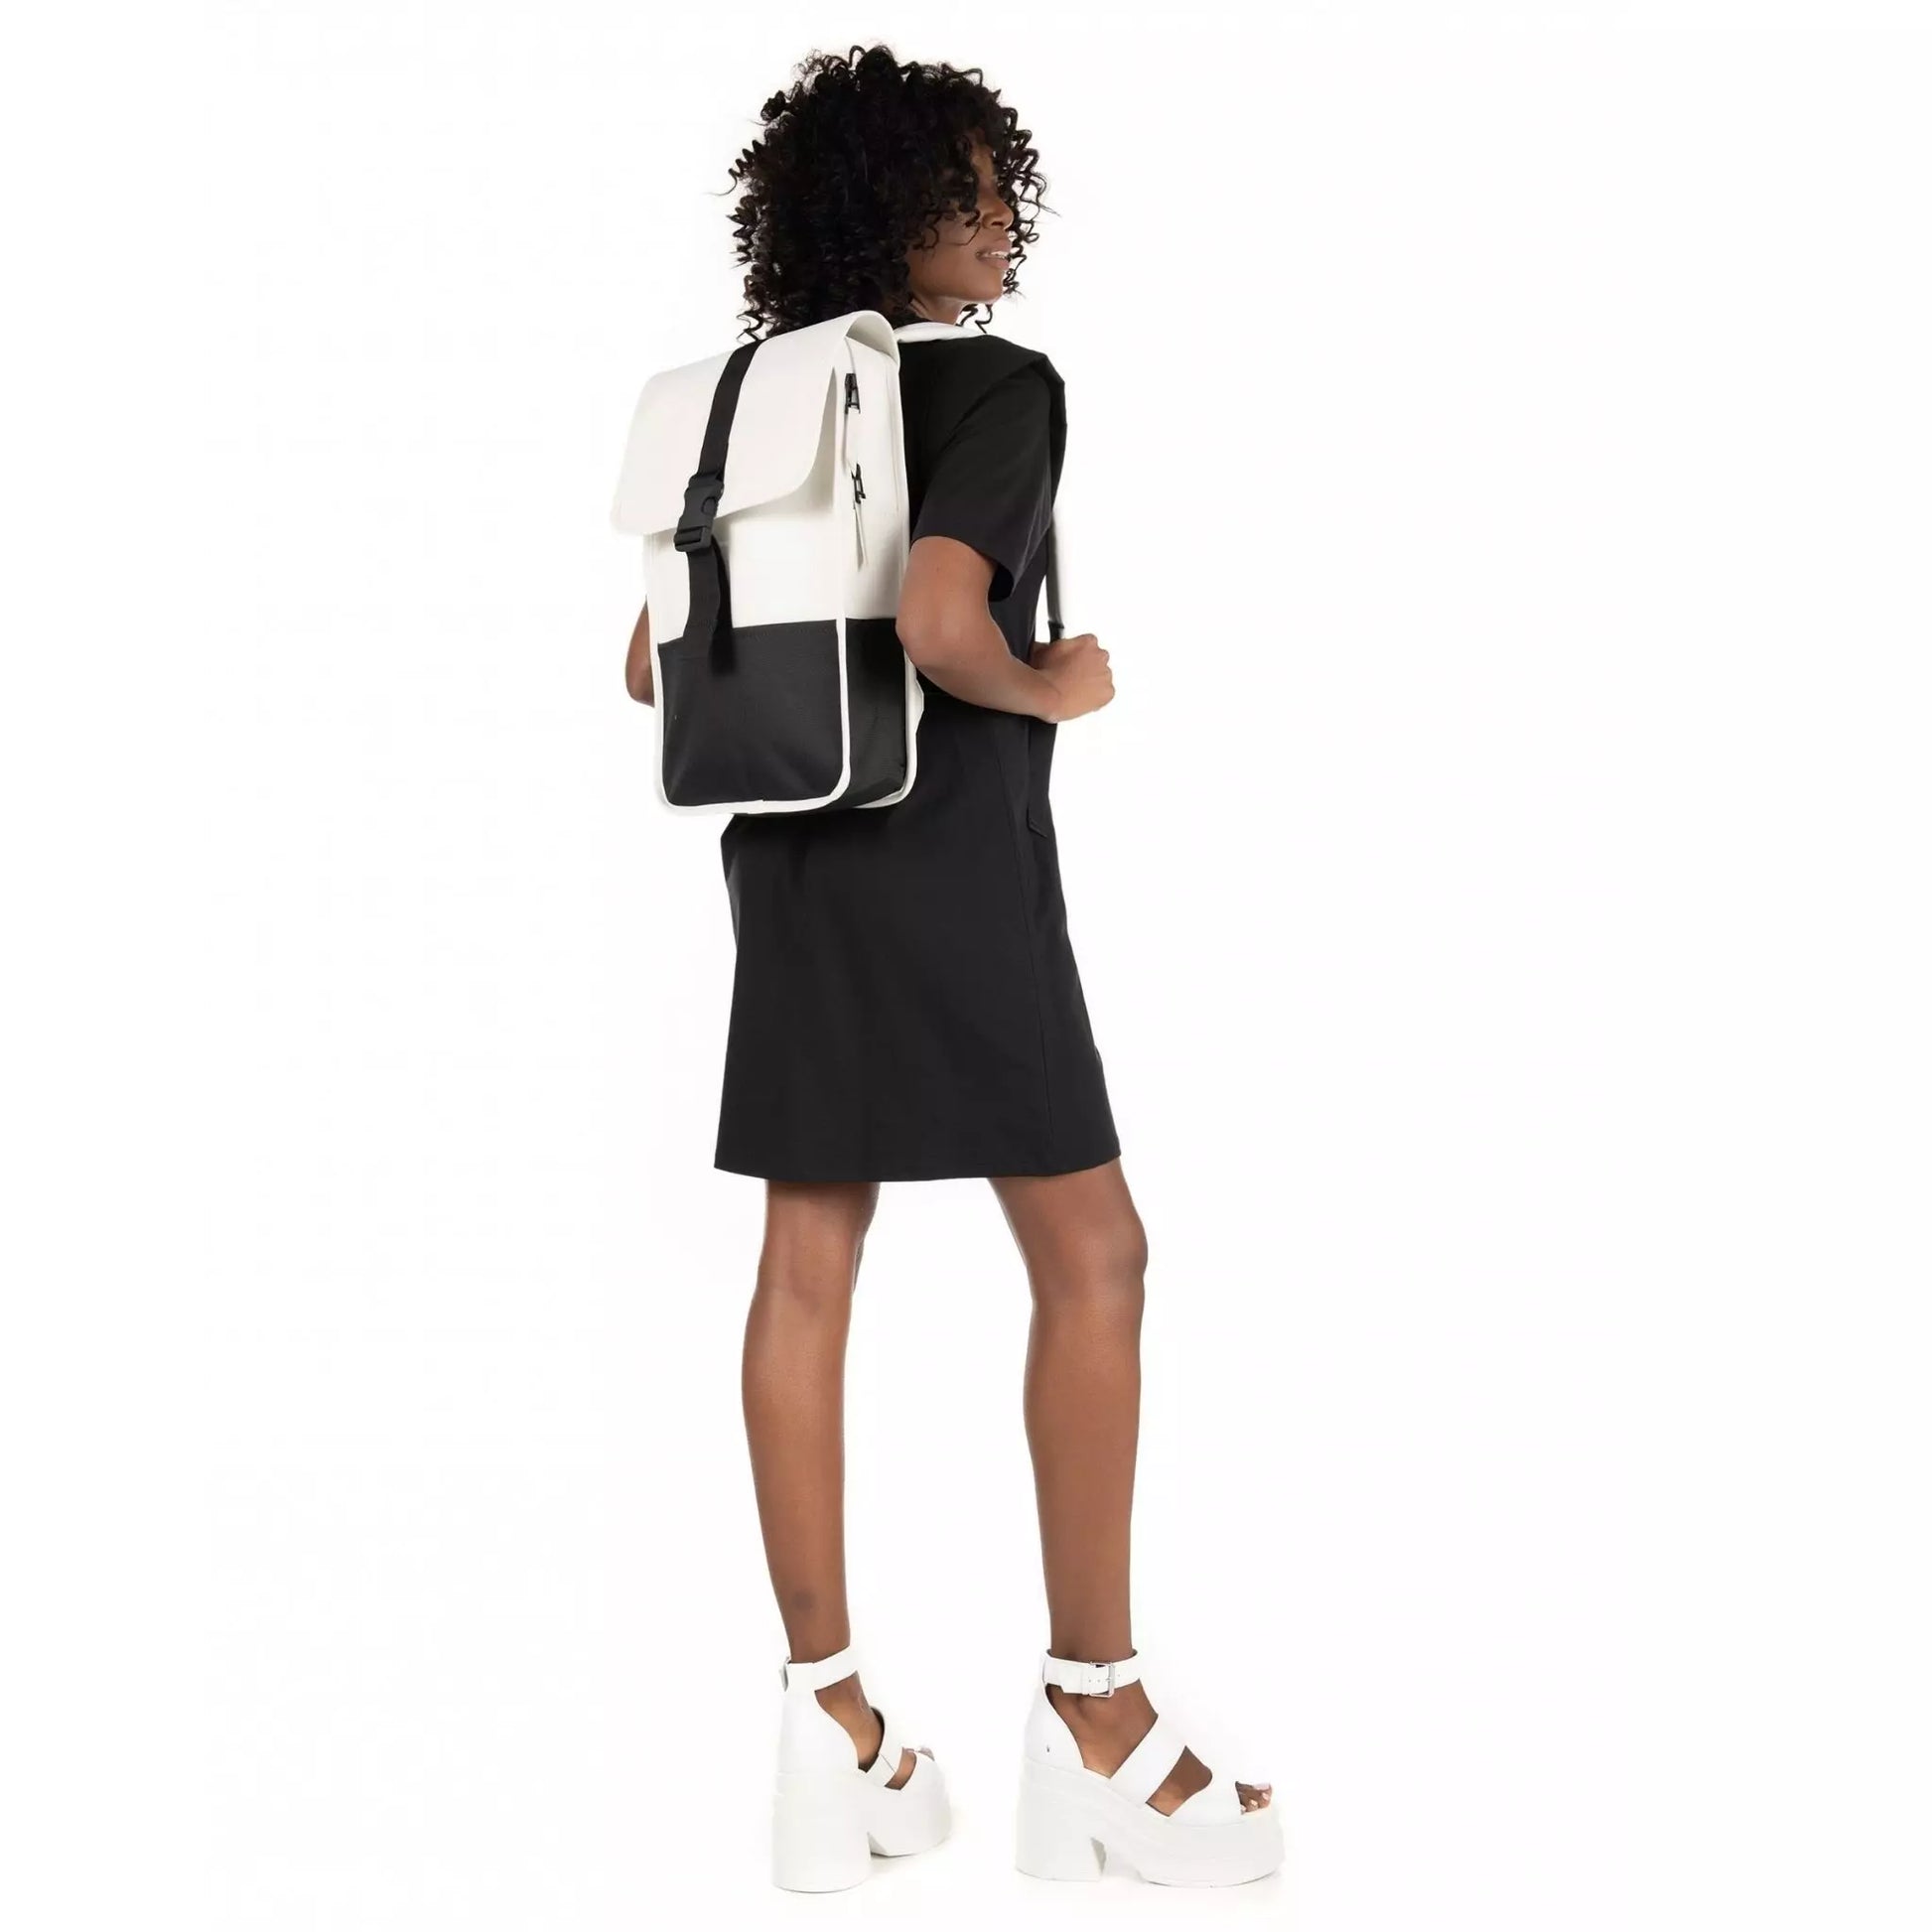 Rains waterproof buckle backpack mini off white black worn by women